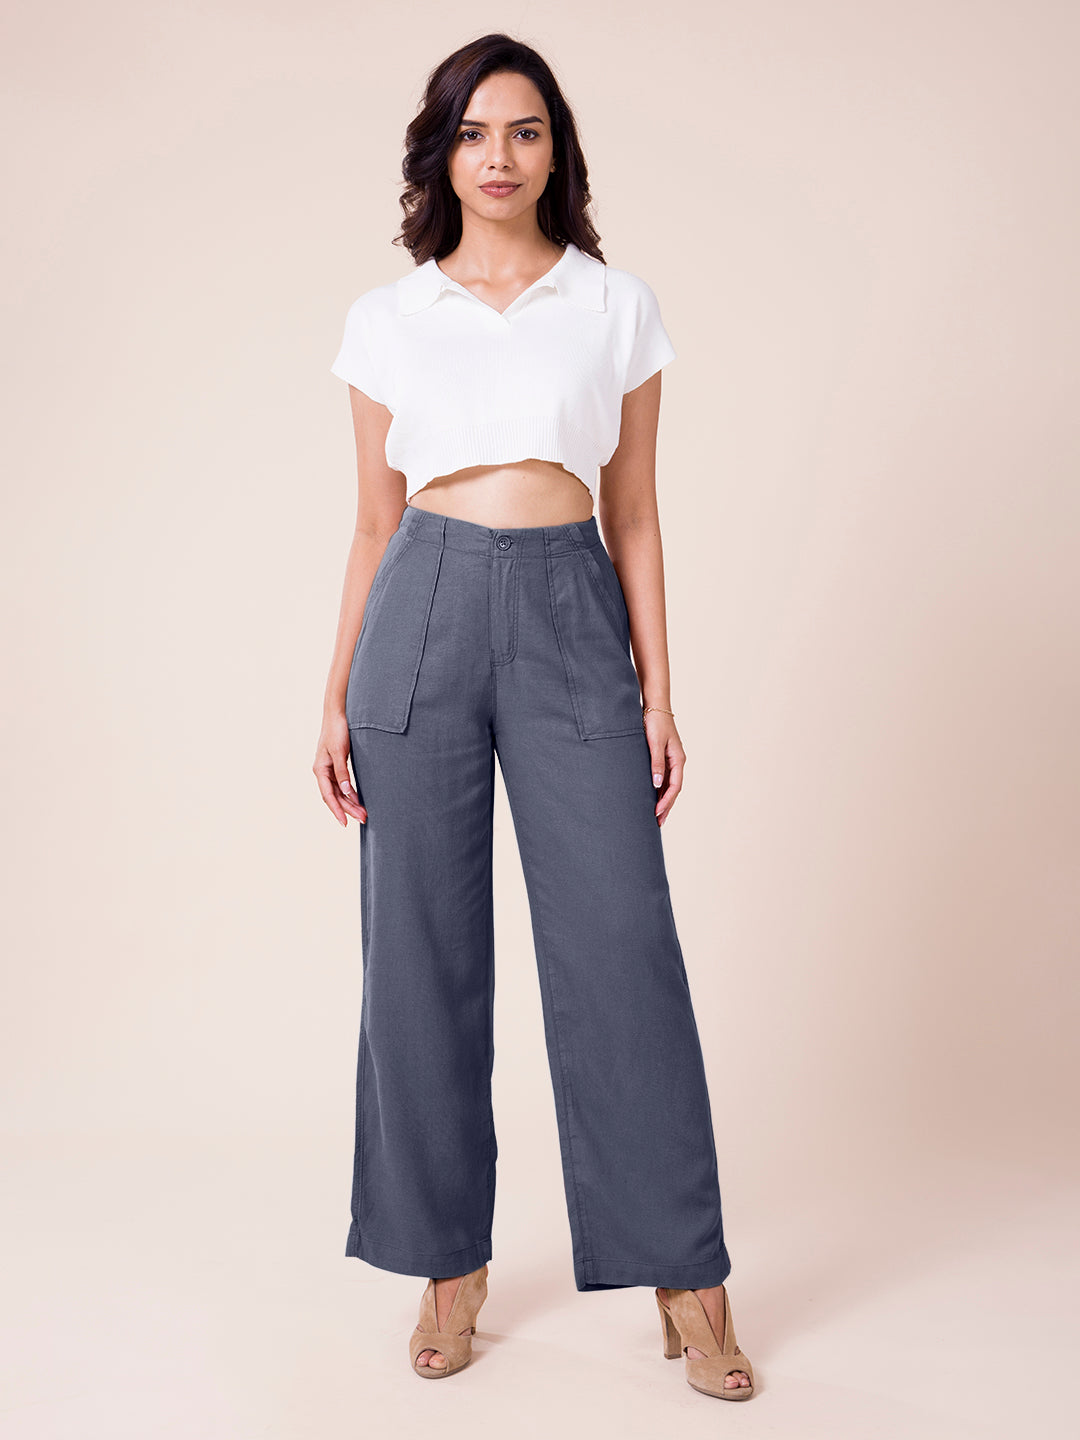 GO COLORS Women's Regular Cotton Trousers - NahidCollection